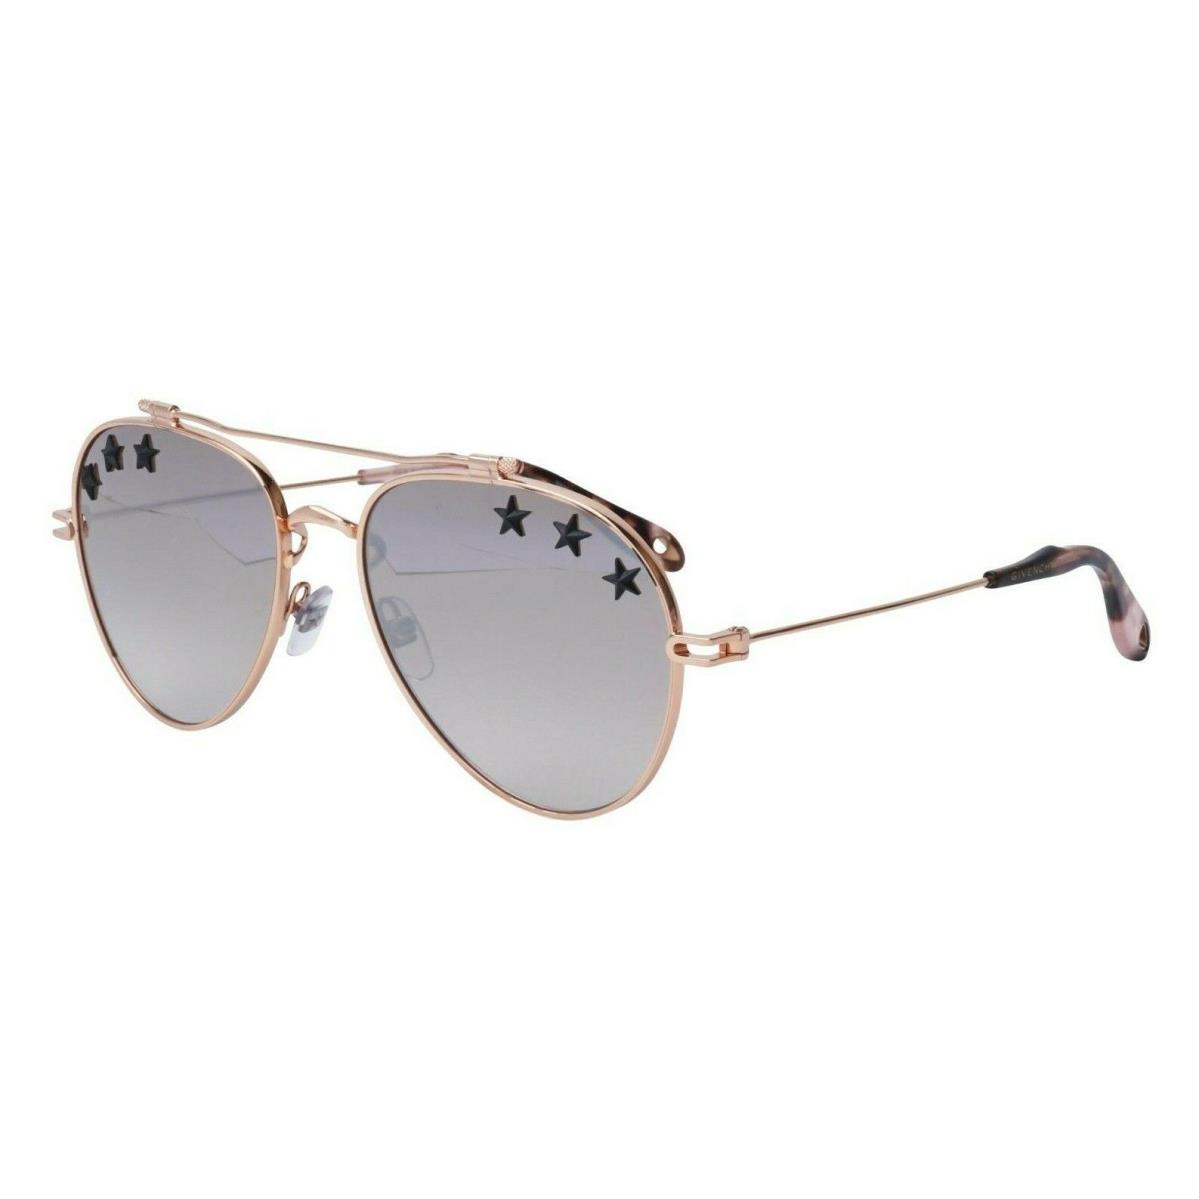 Givenchy GV7057/STARS Ddbnq Gold Copper Mirrored Aviator Sunglasses